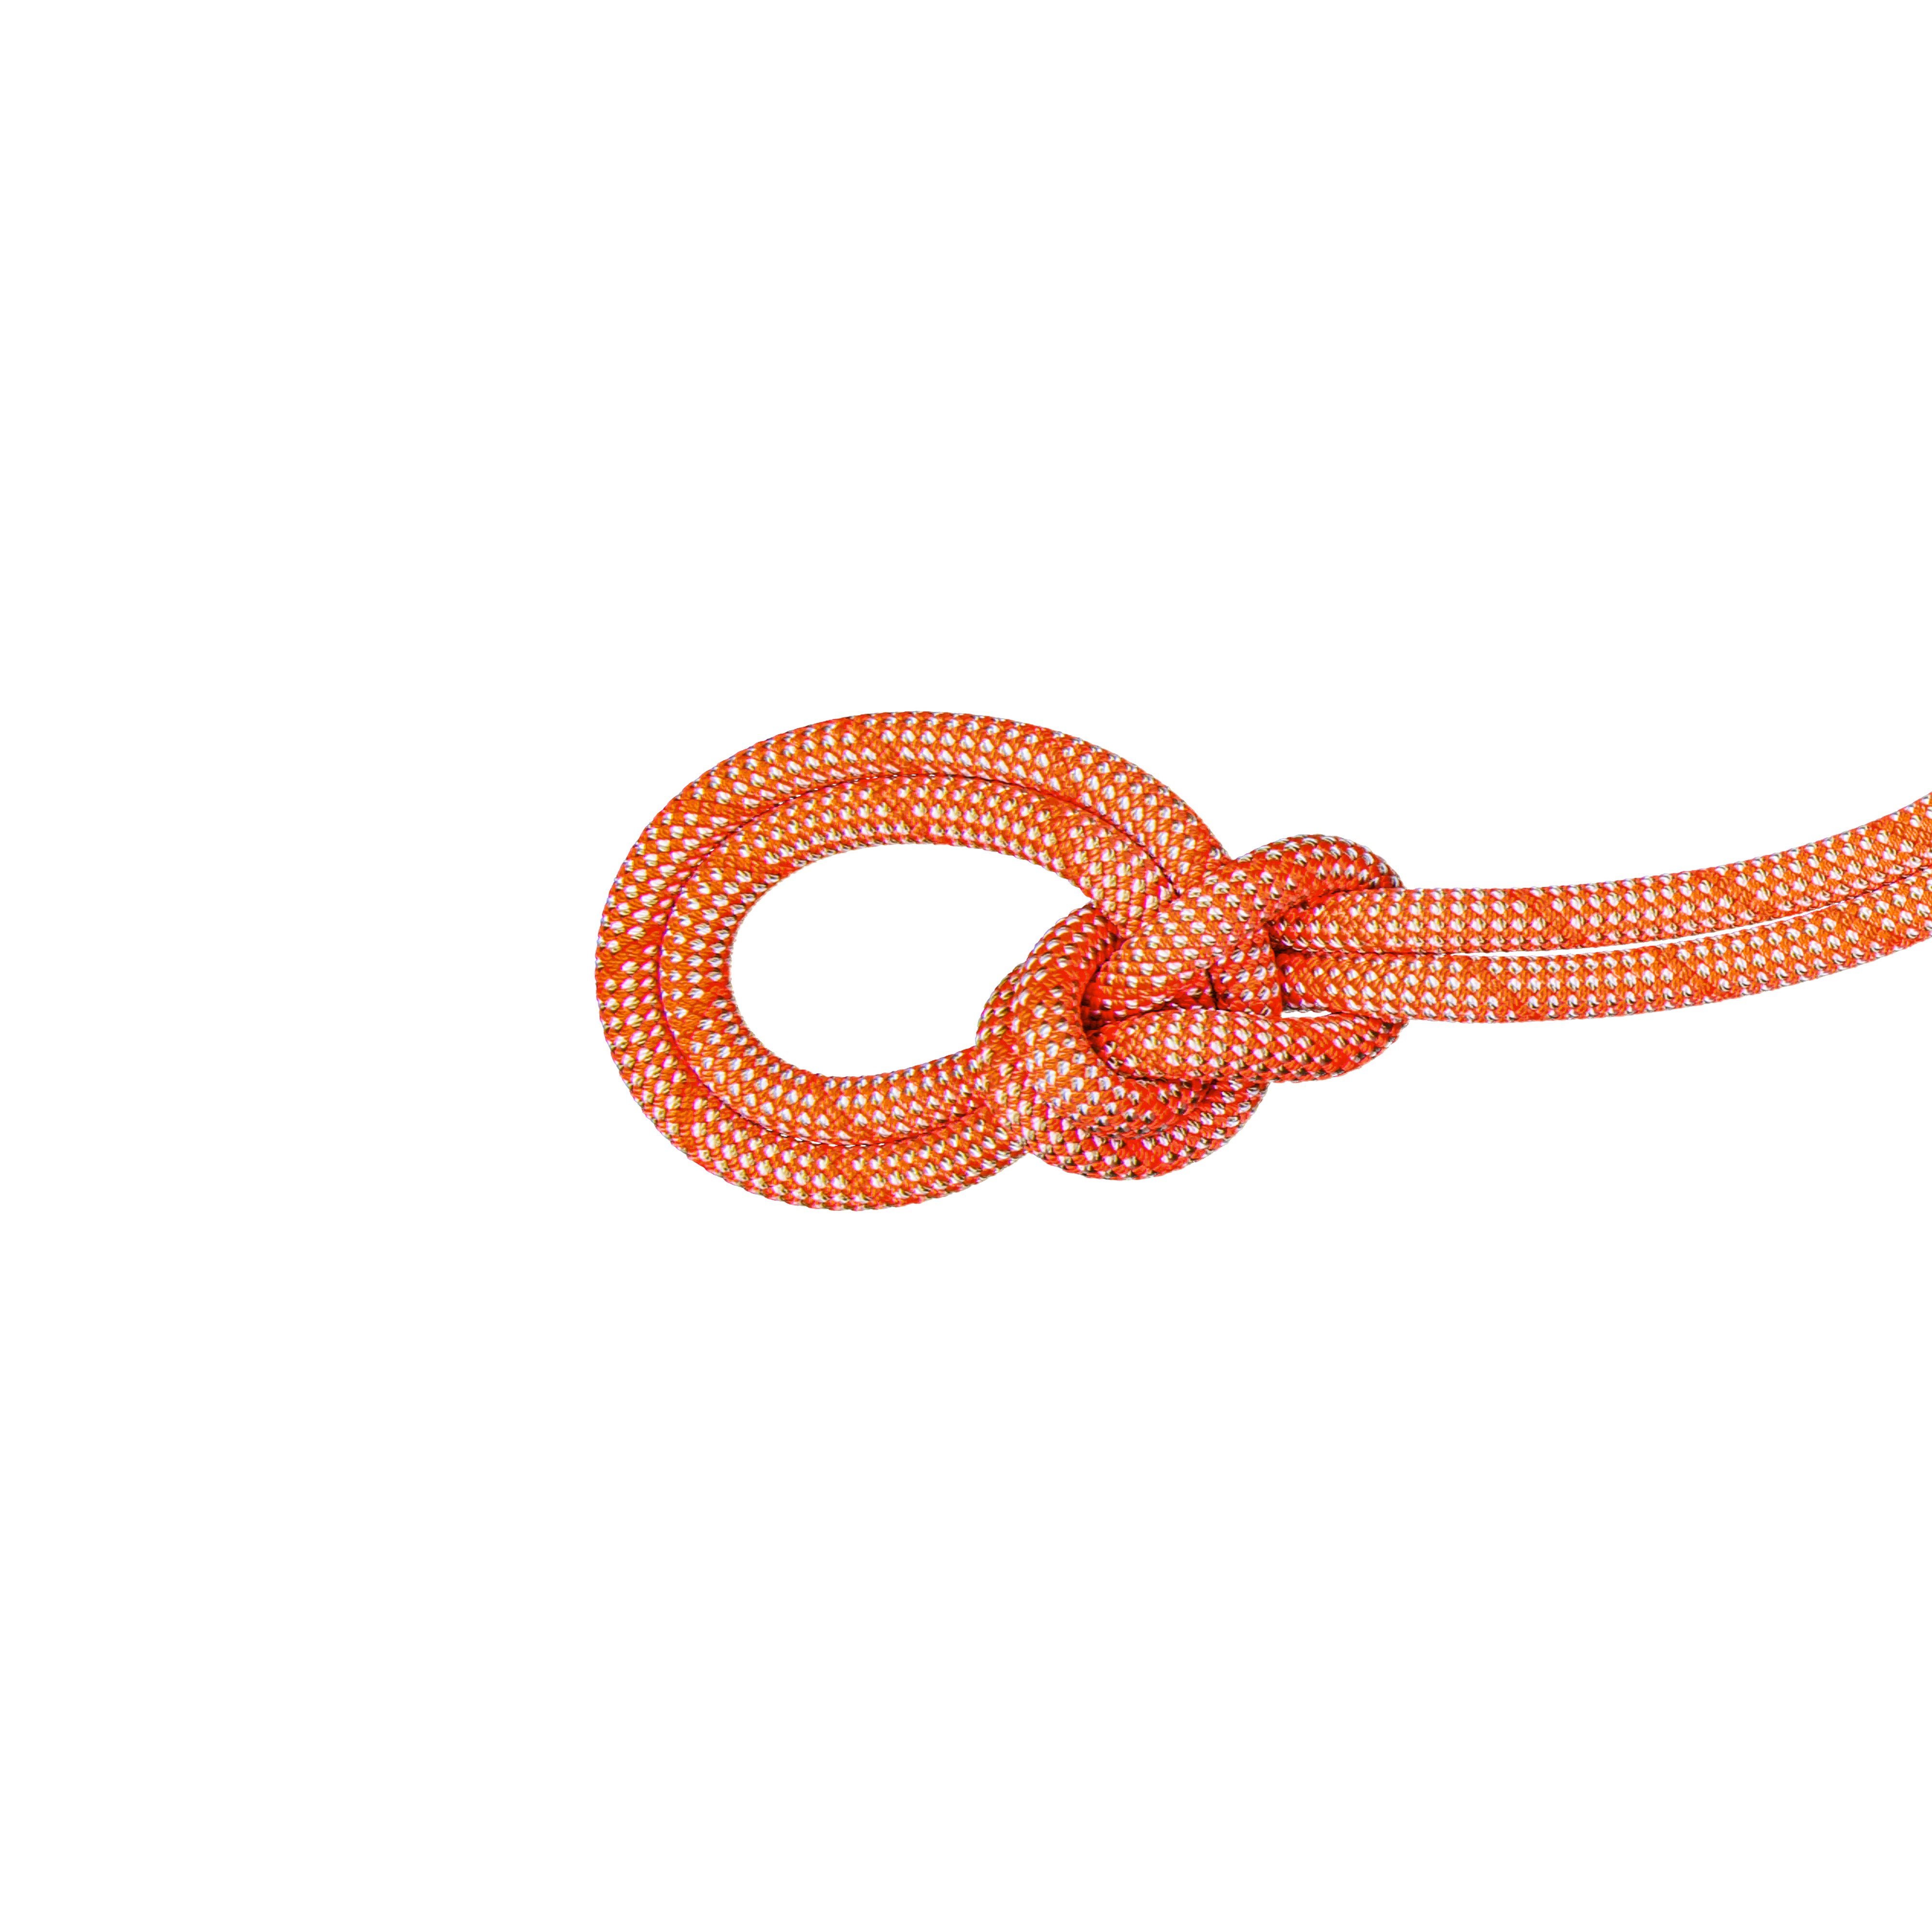 9.8 Crag Classic Rope - Classic Standard, orange-white, 60 m thumbnail